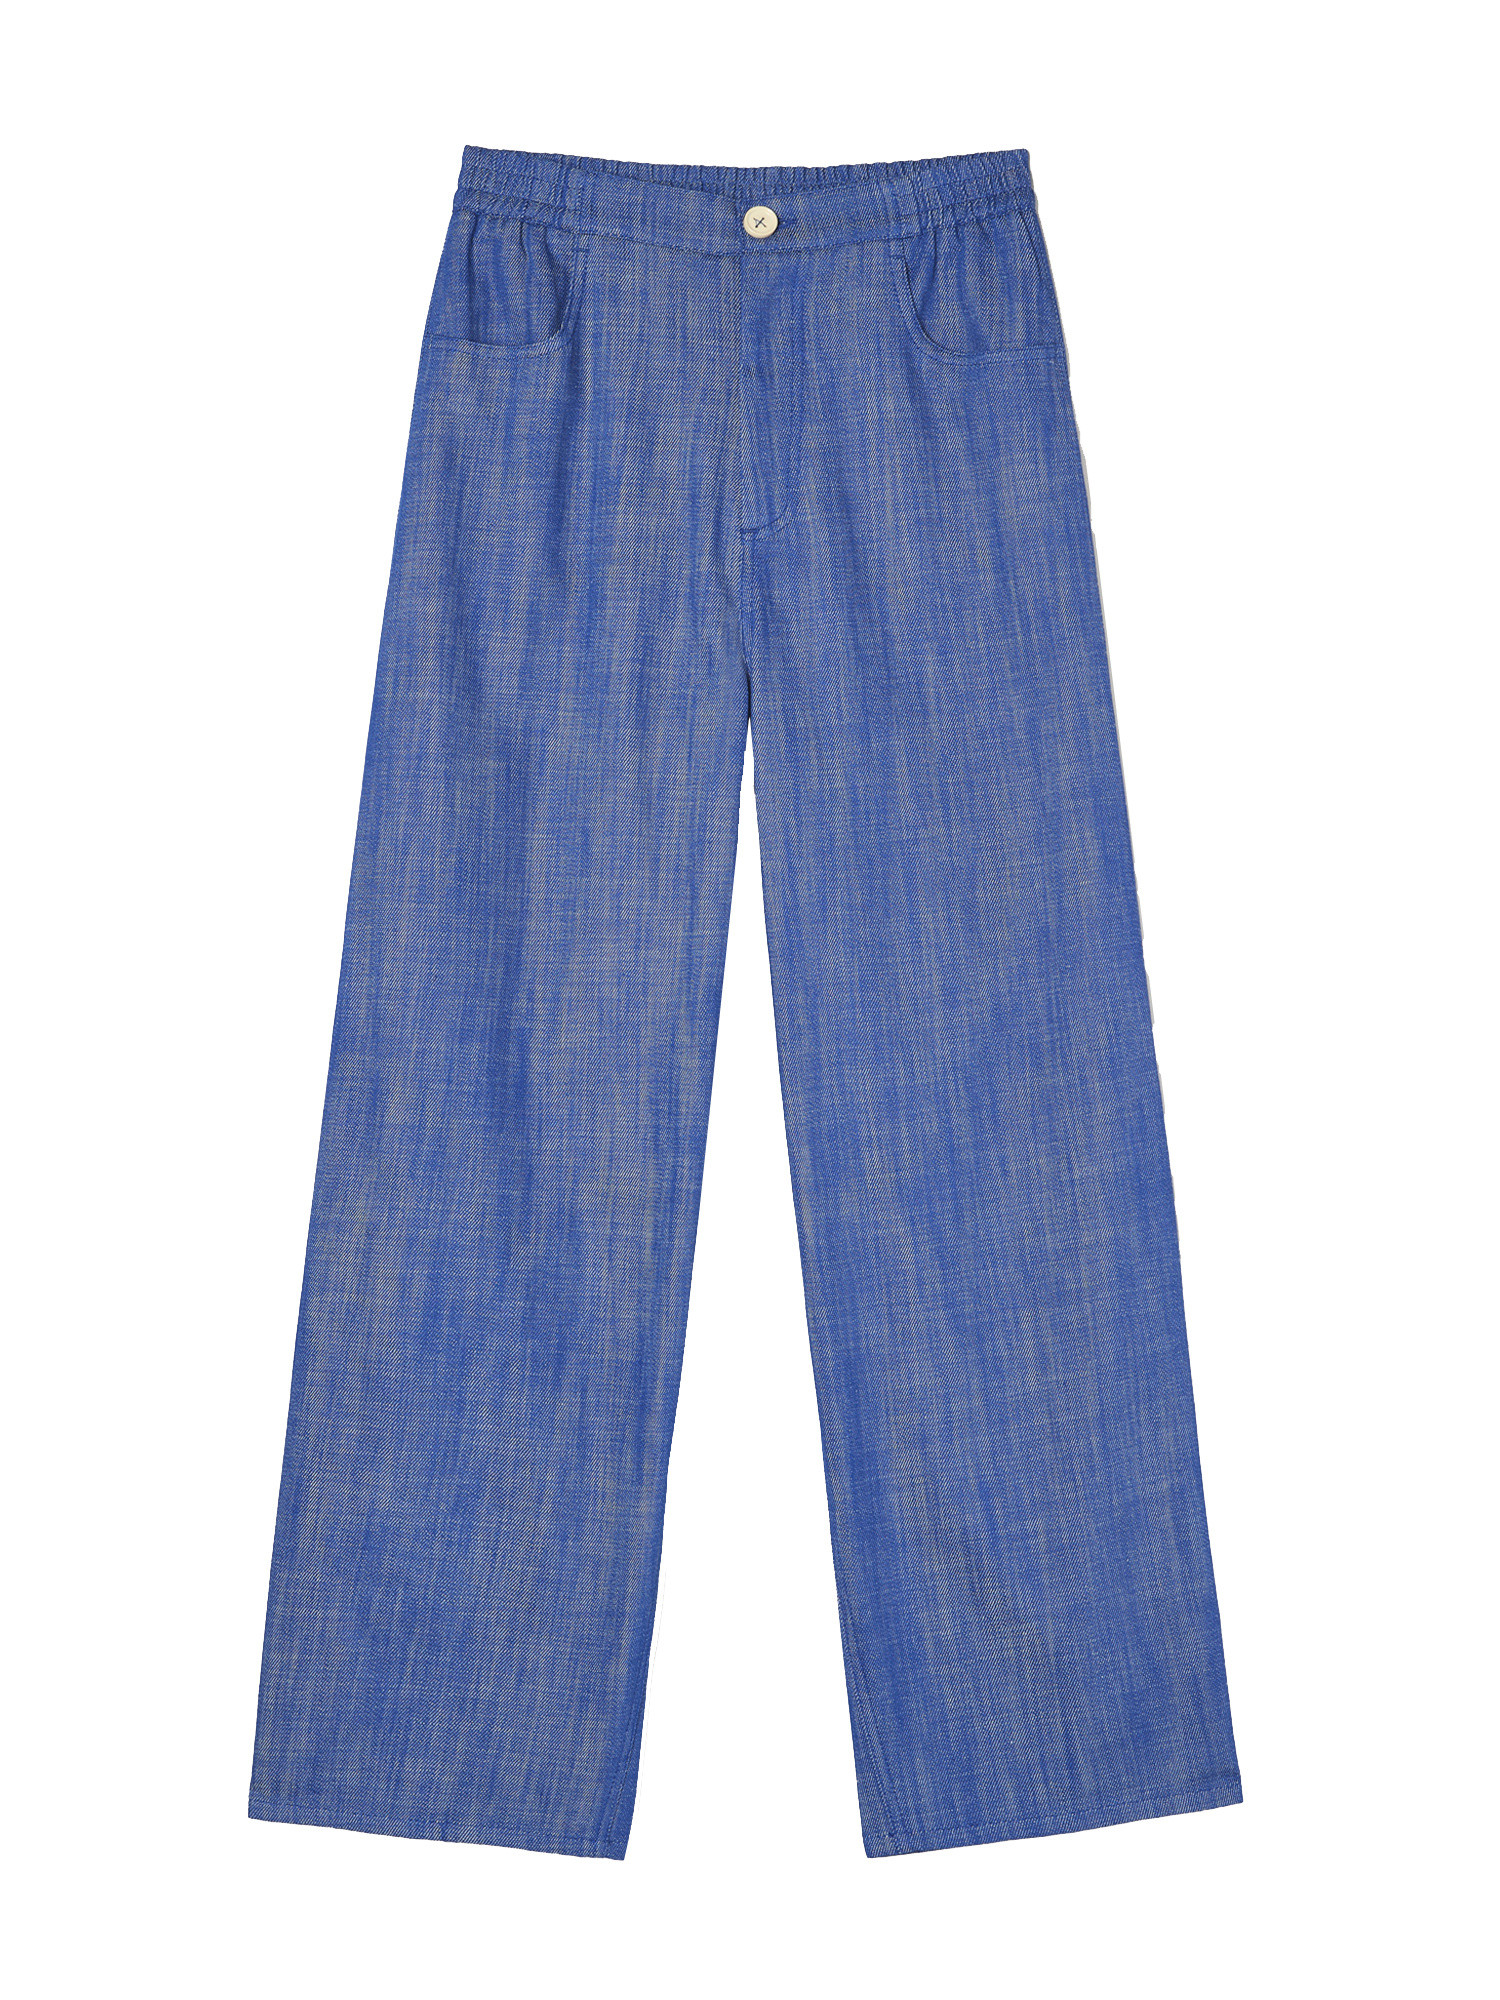 Attic and Barn - Pantaloni Cortina in cotone, Blu bluette, large image number 0